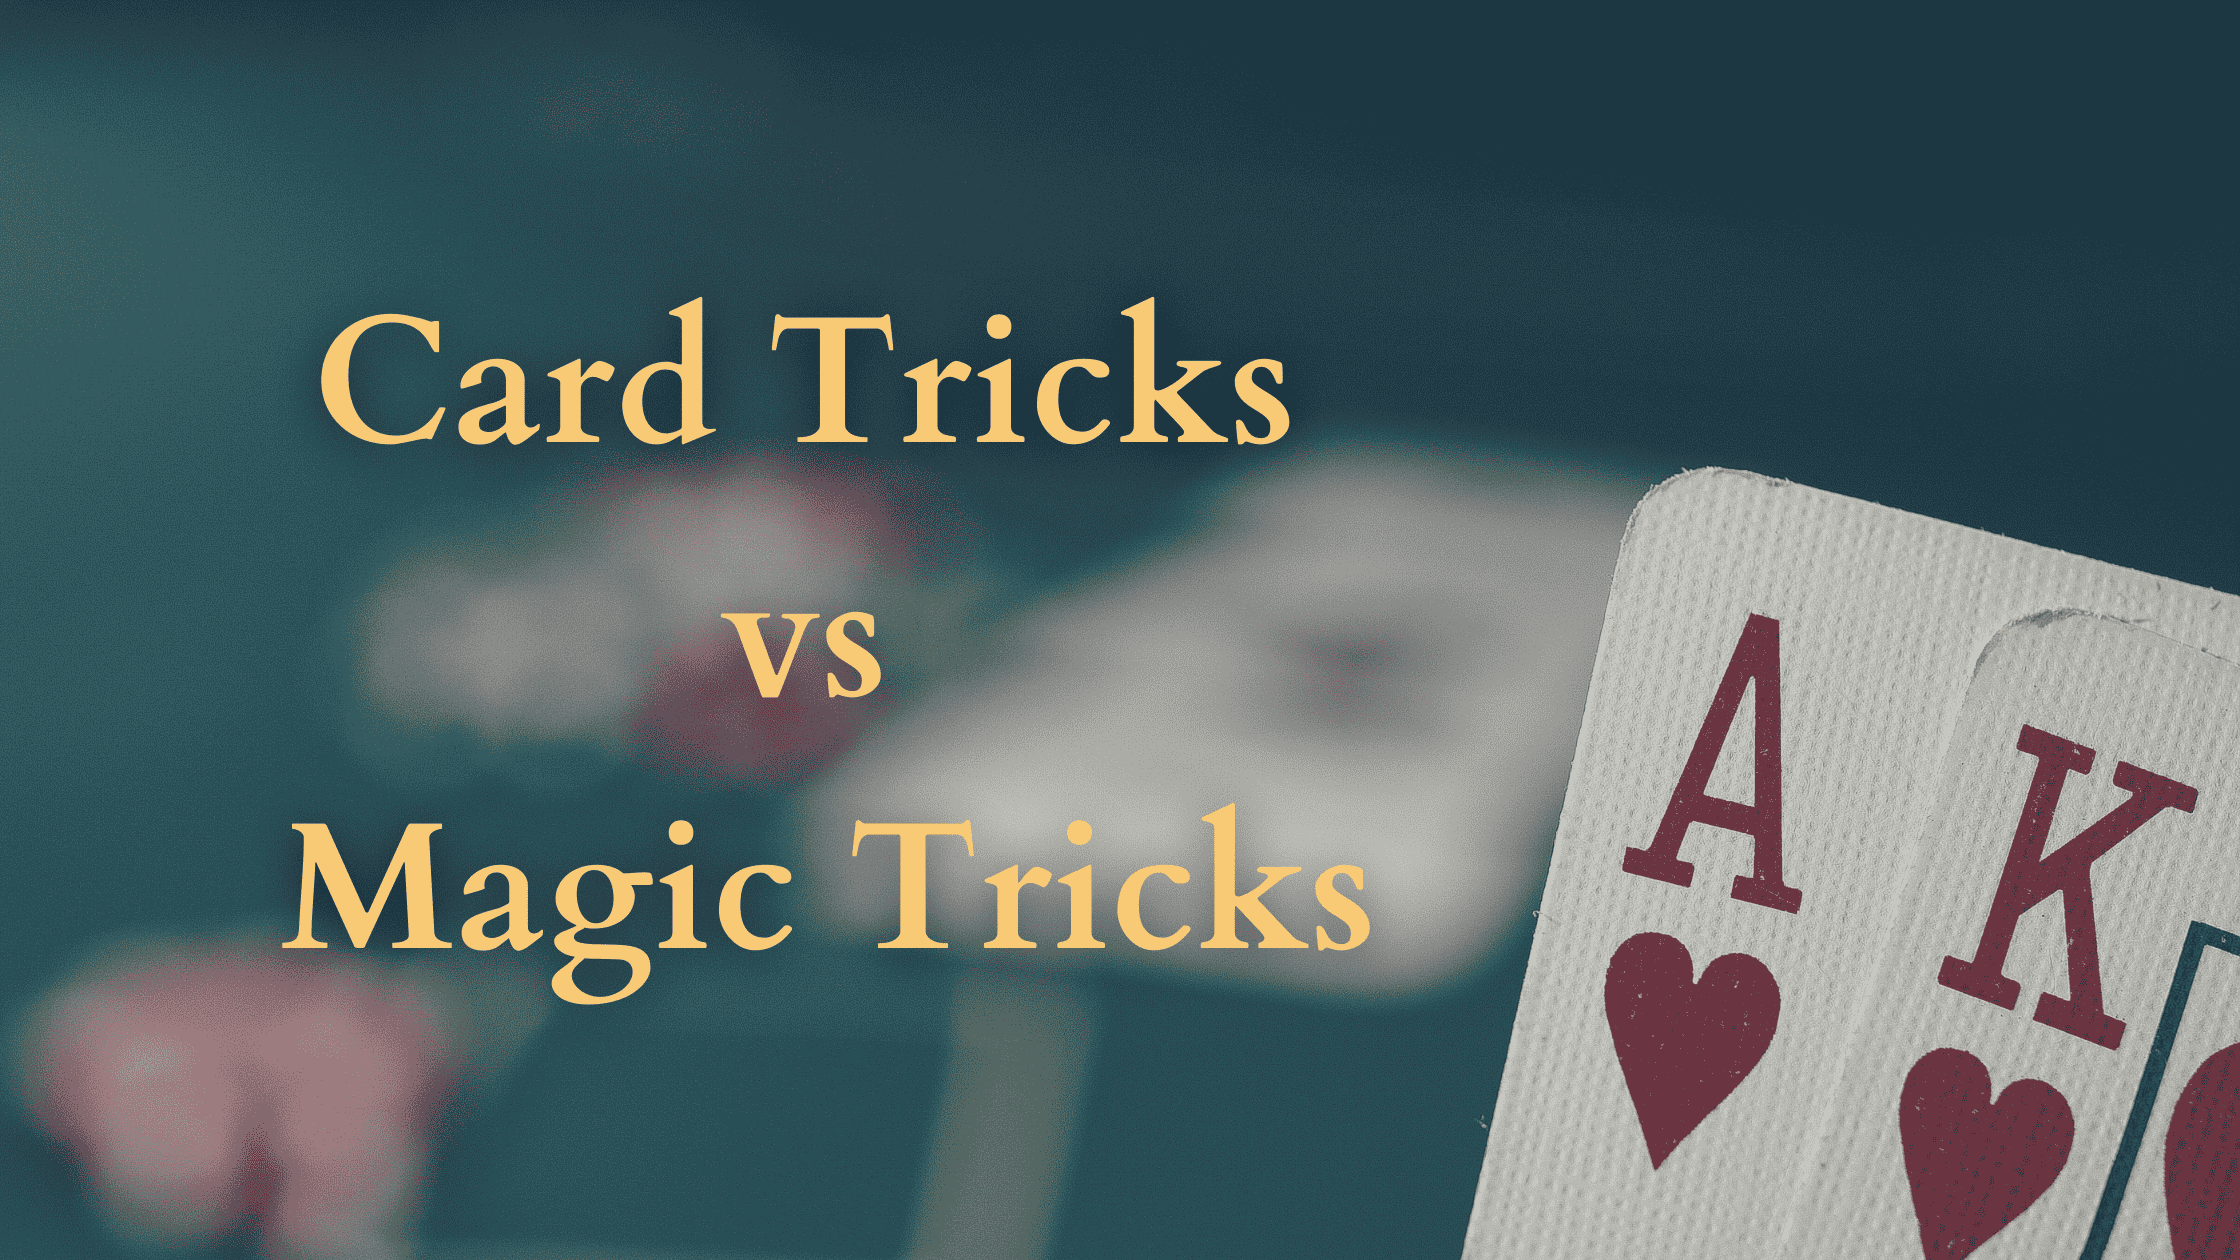 Card Tricks vs. Magic Tricks